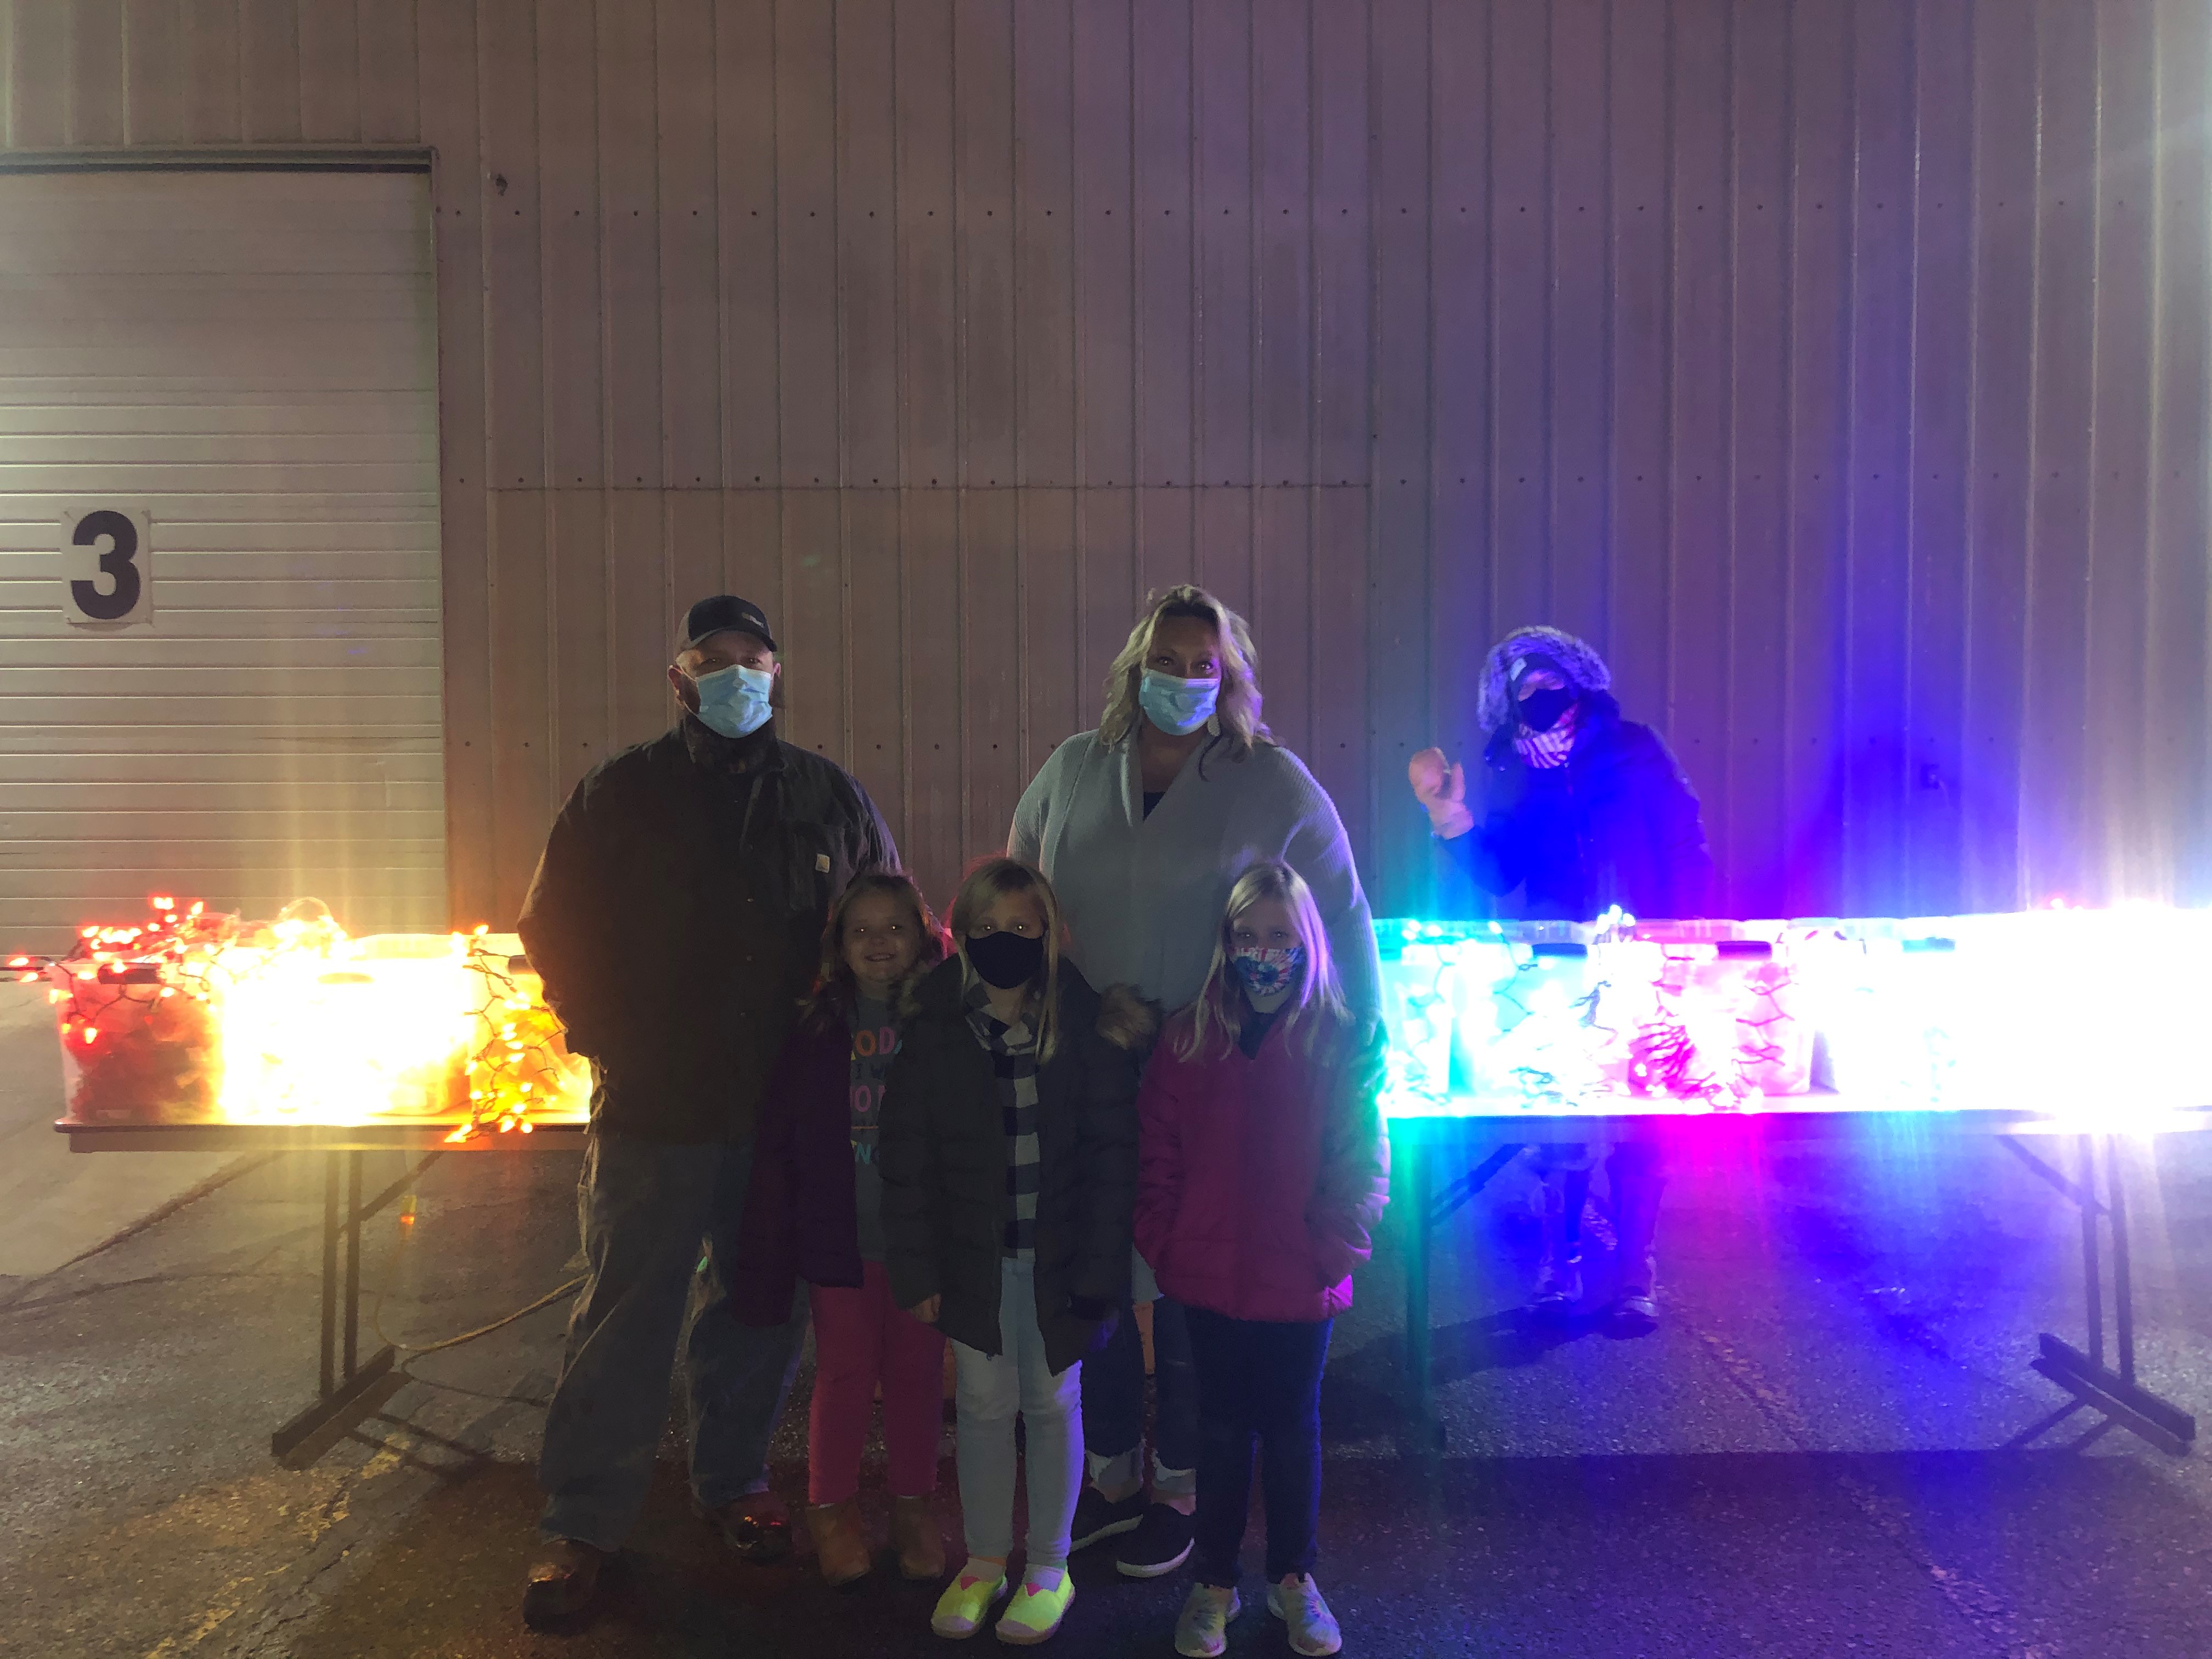 The Dillon family participates in LED event